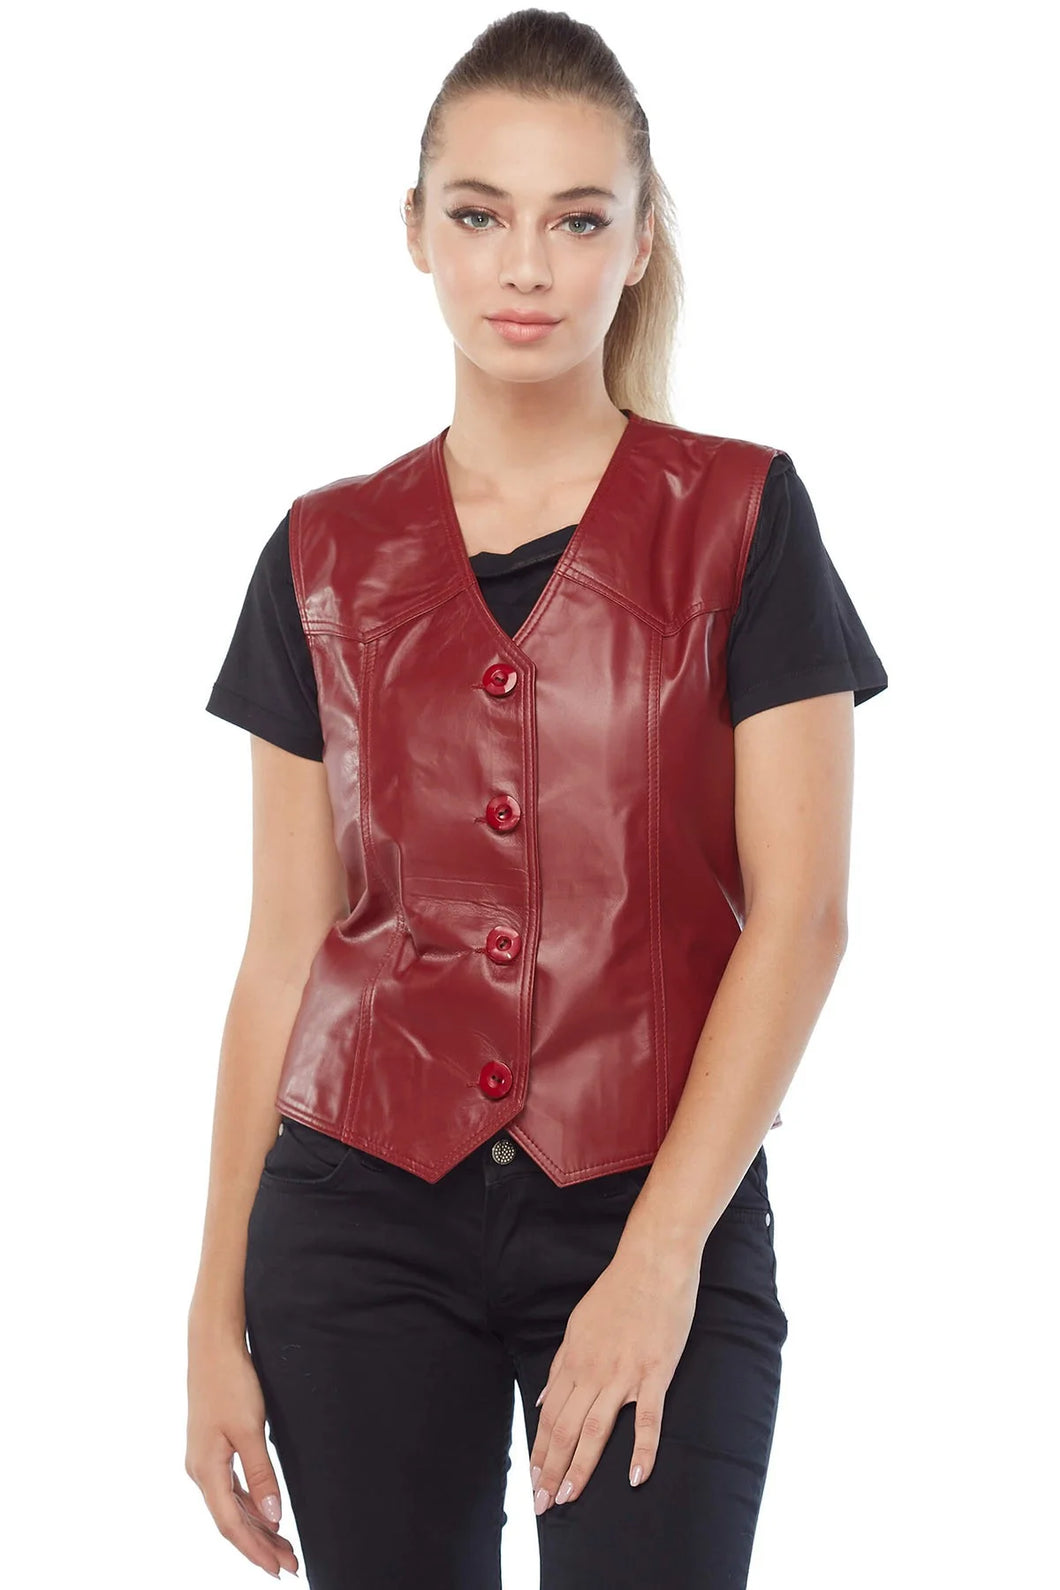 Women's Bright Red Biker Leather Vest